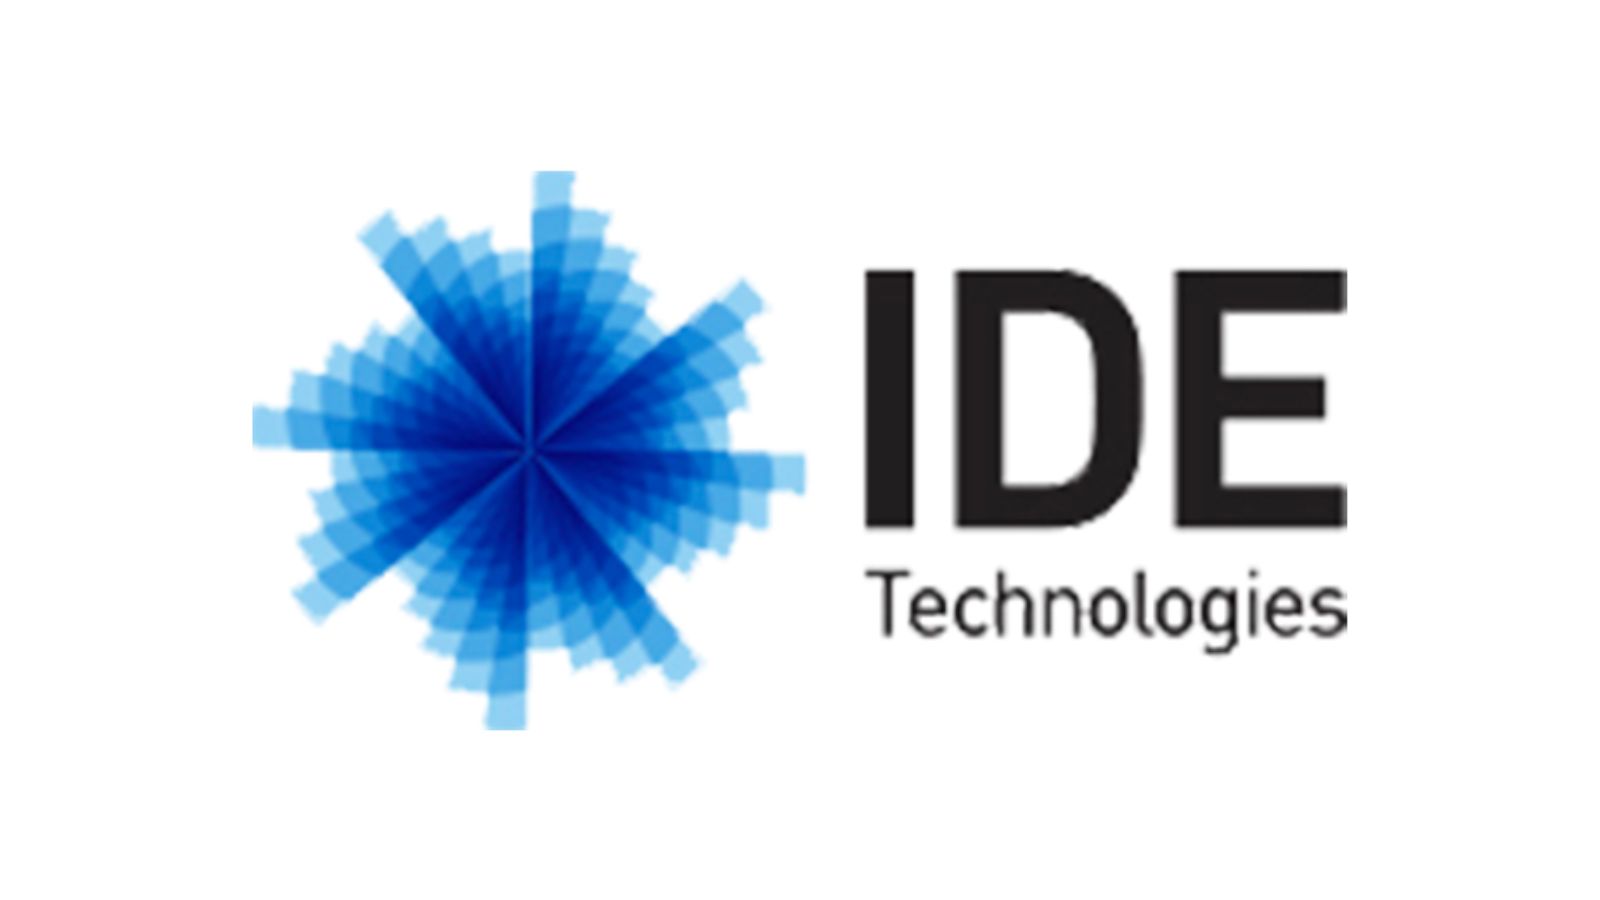 IDE Technologies